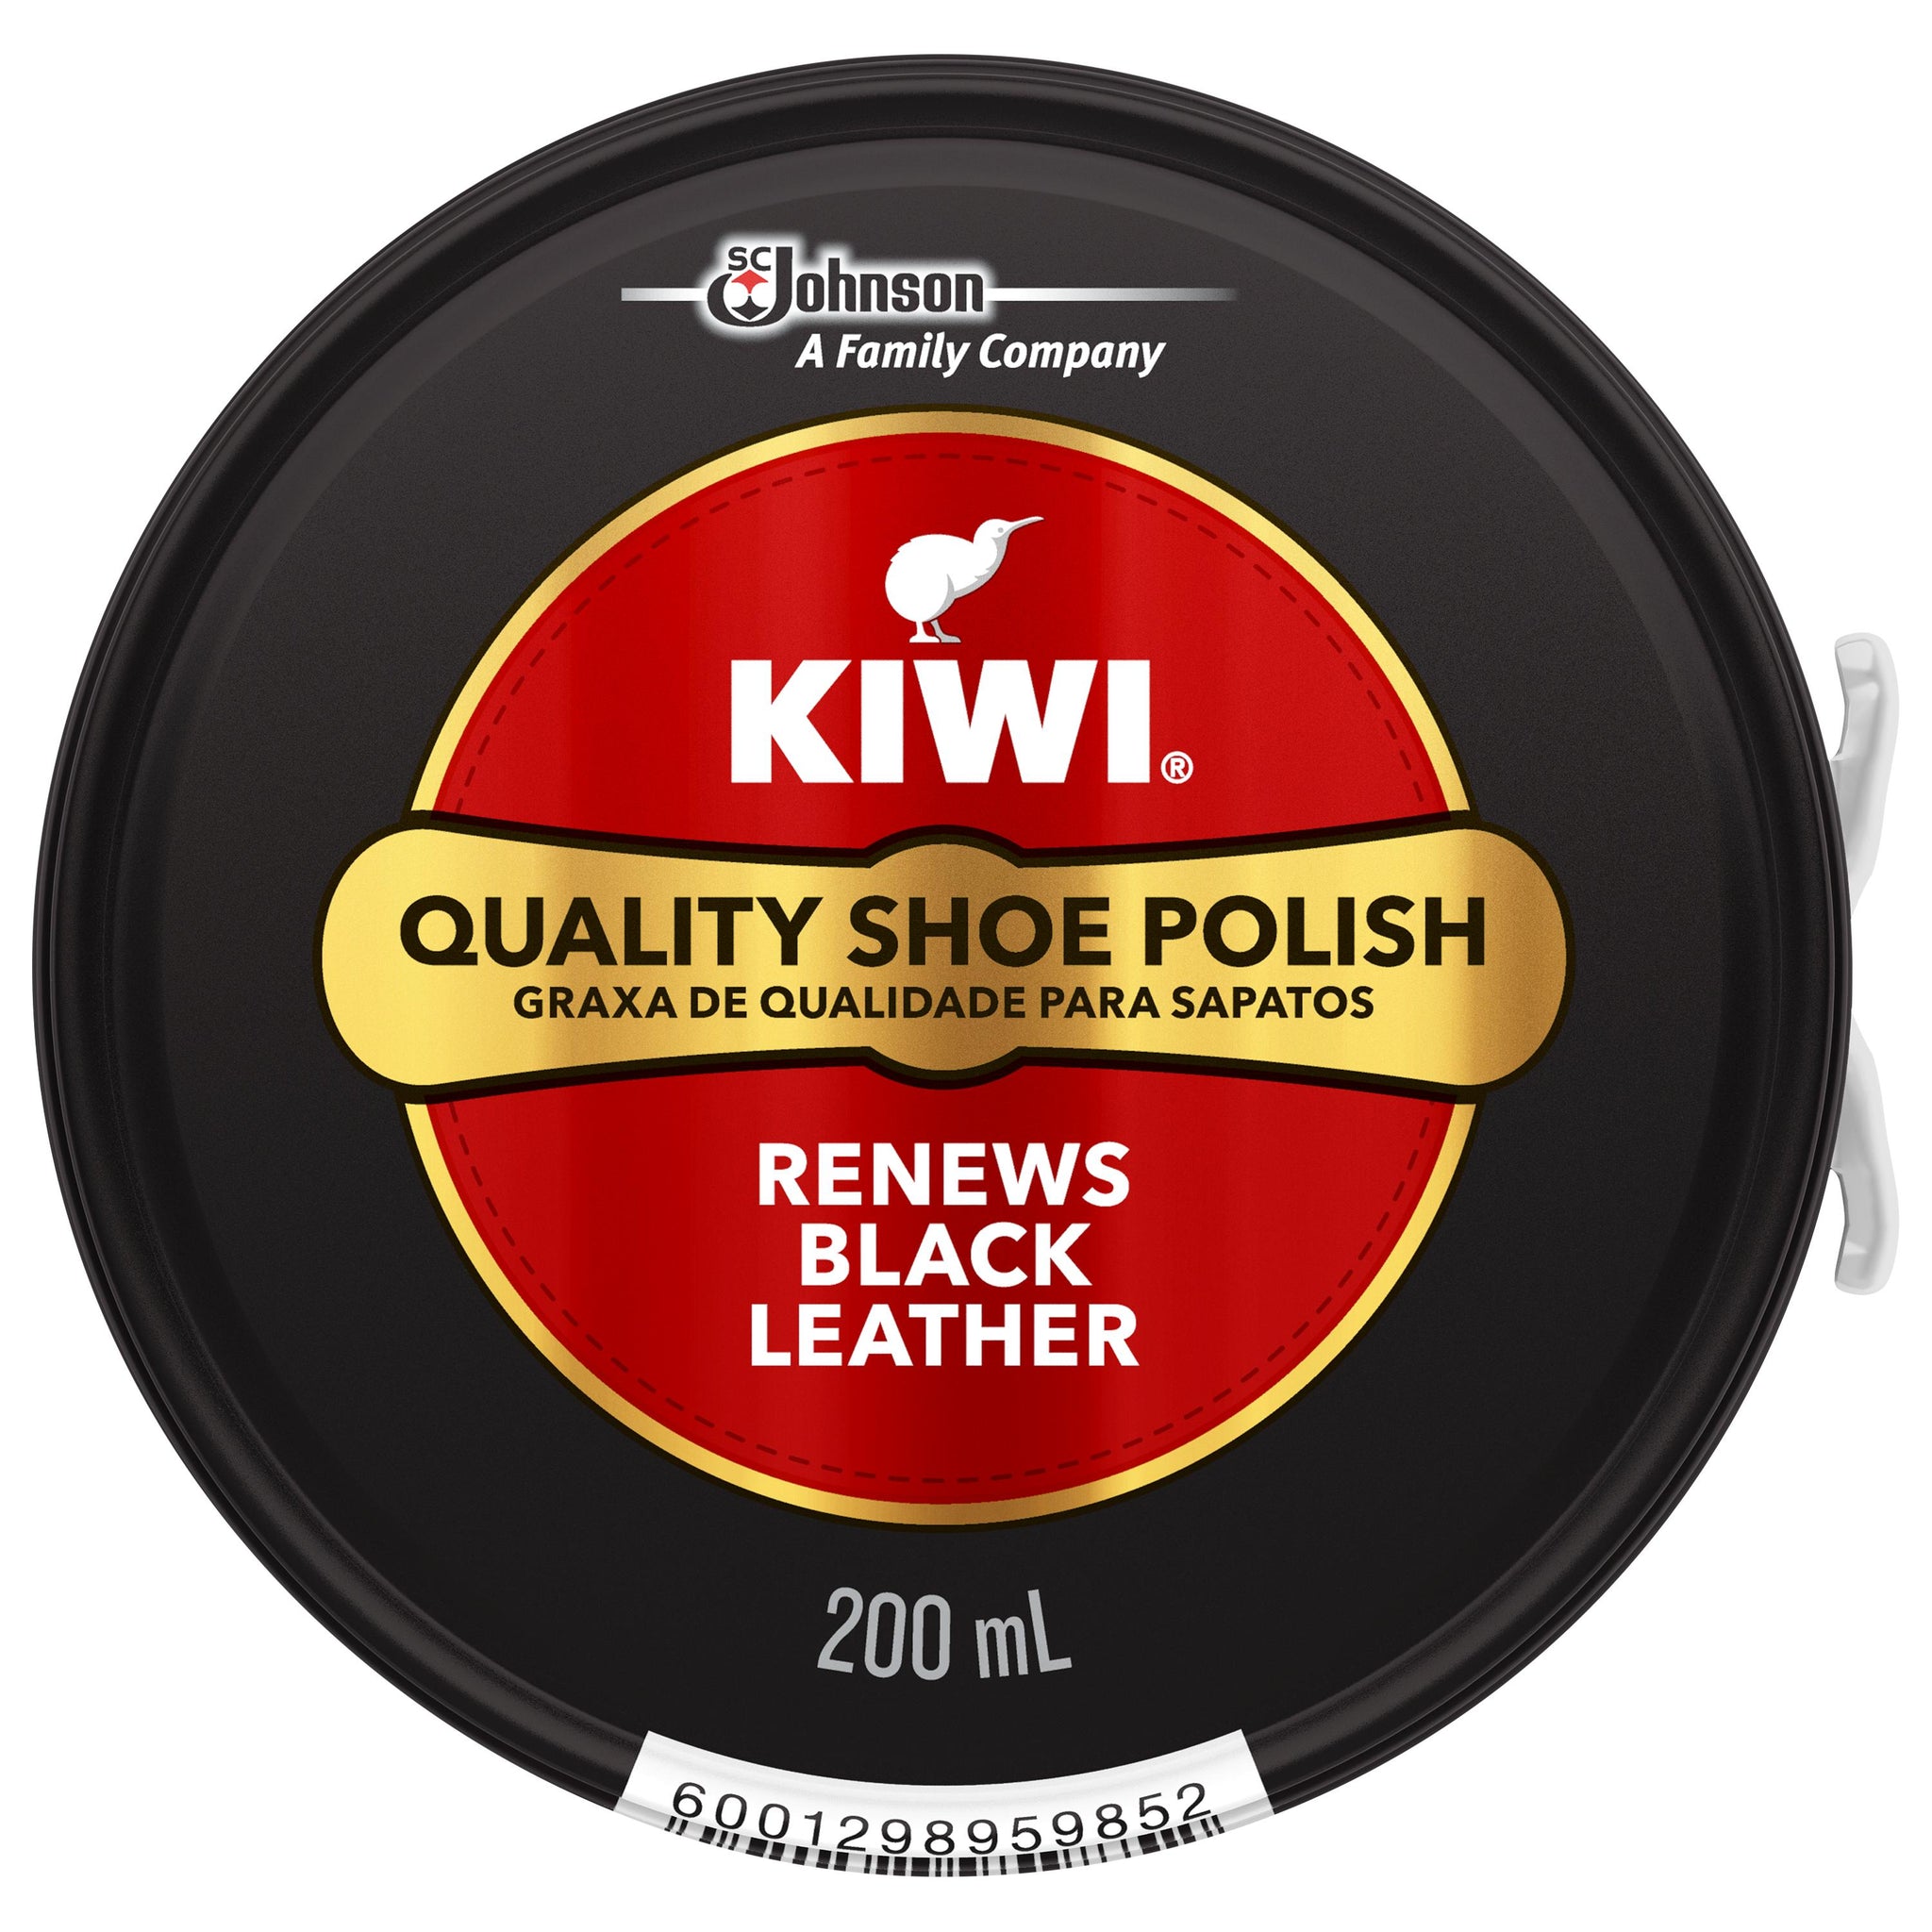 kiwi shoe polish price